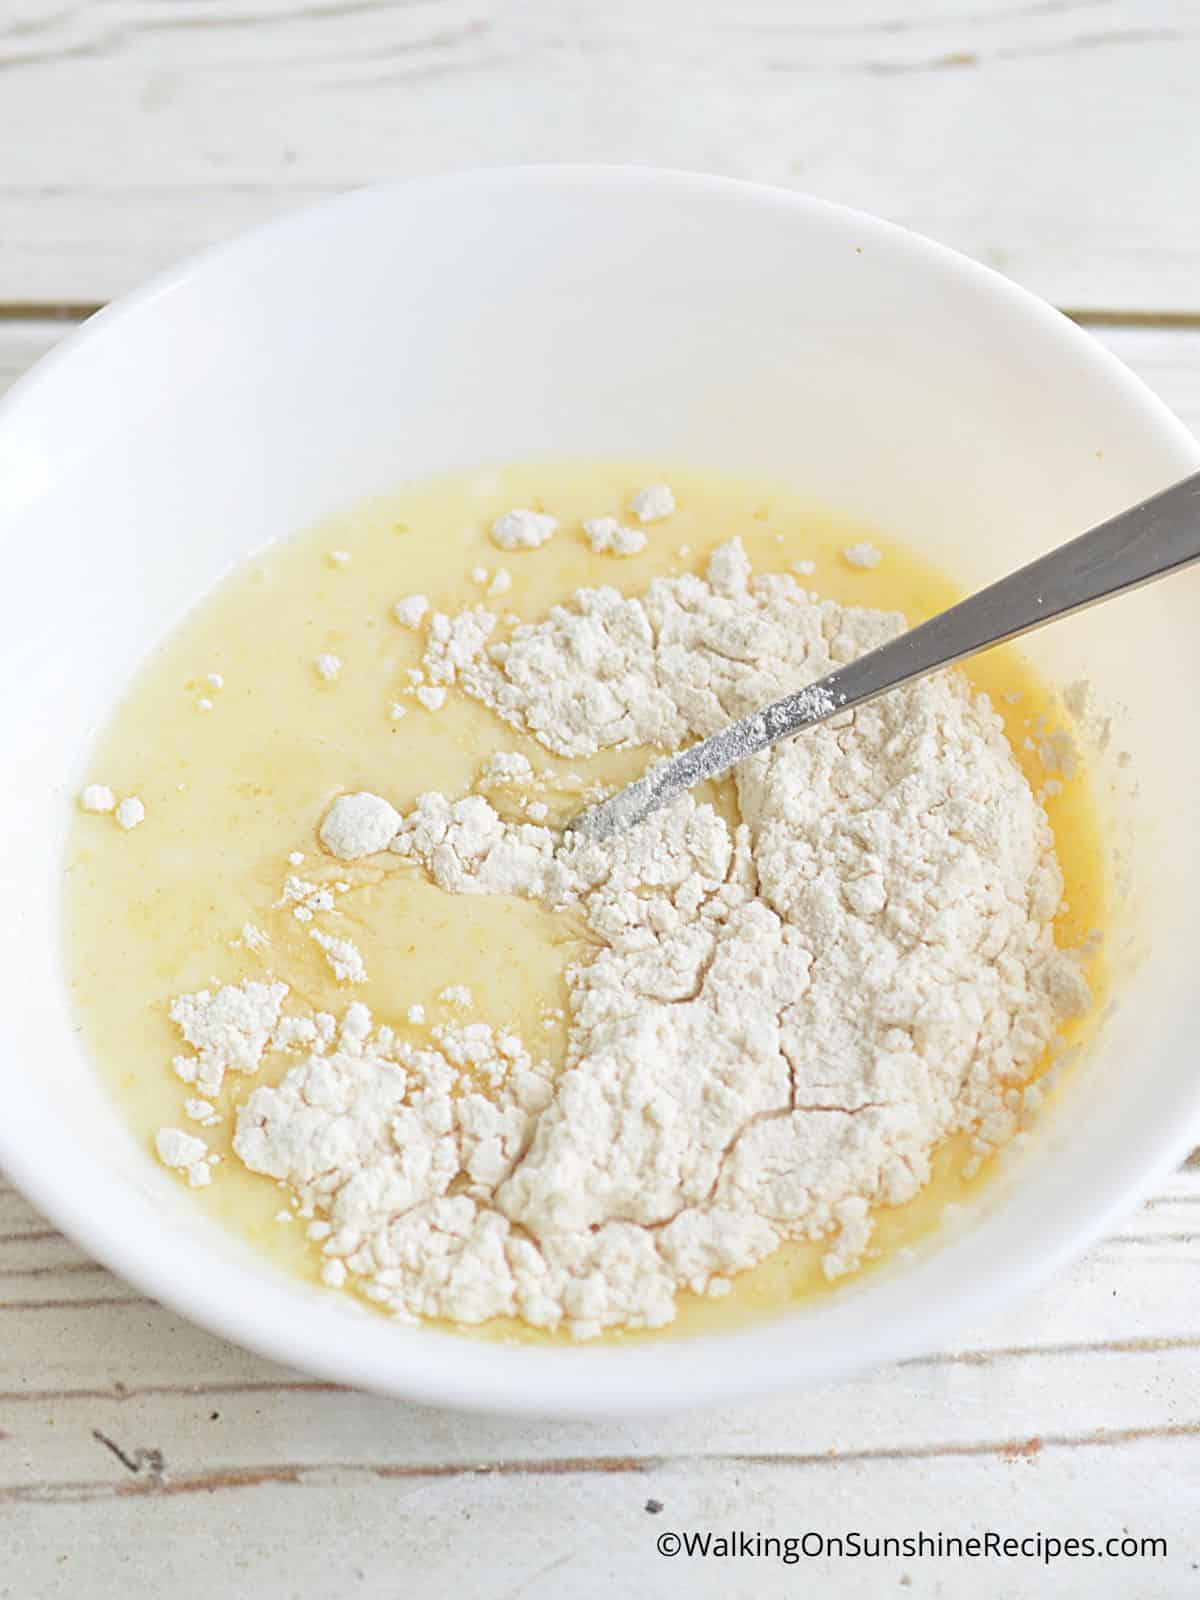 Add vanilla cake mix to wet ingredients in white bowl.